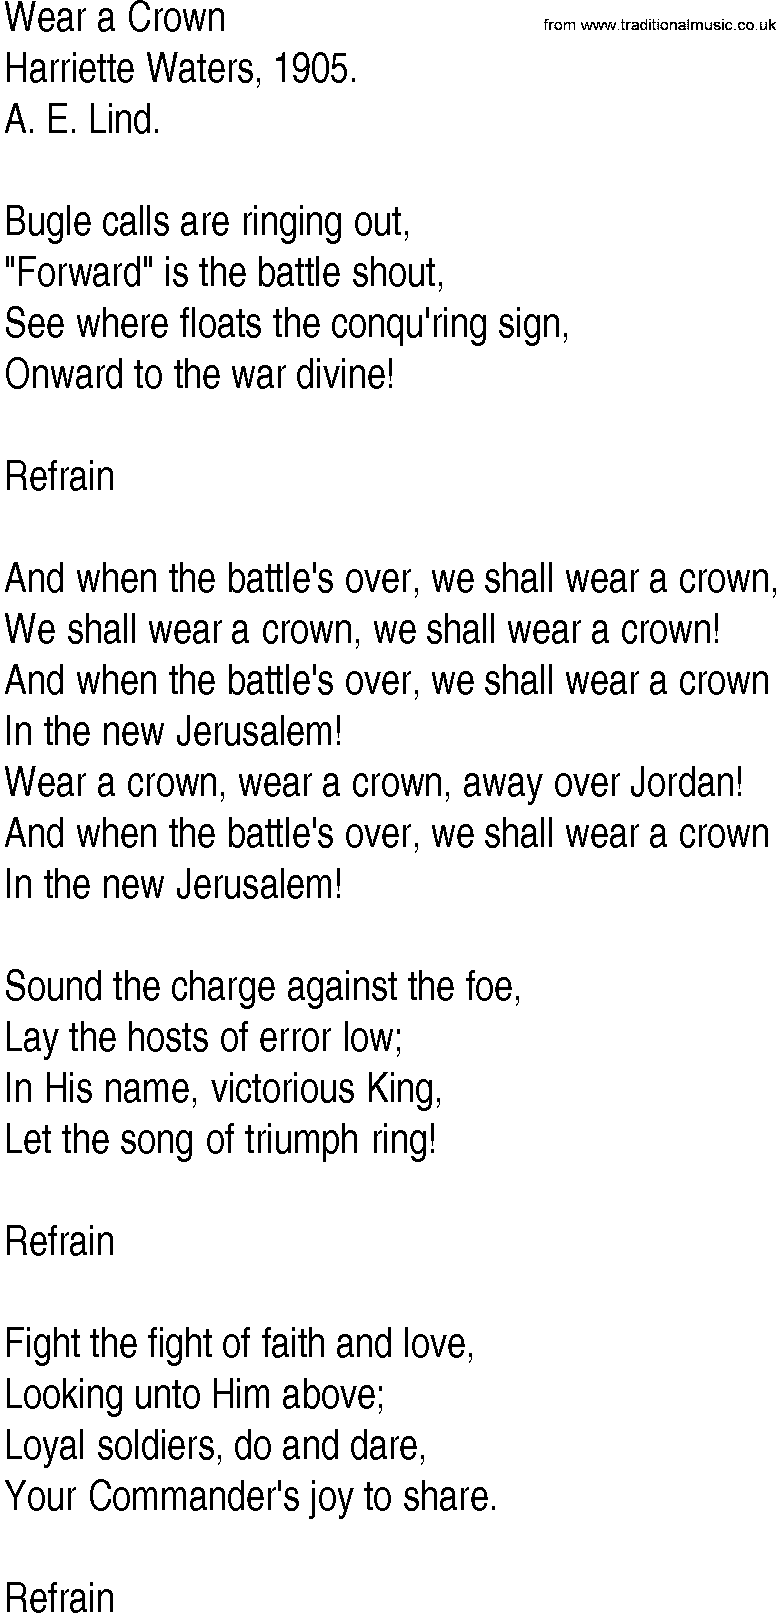 Hymn and Gospel Song: Wear a Crown by Harriette Waters lyrics